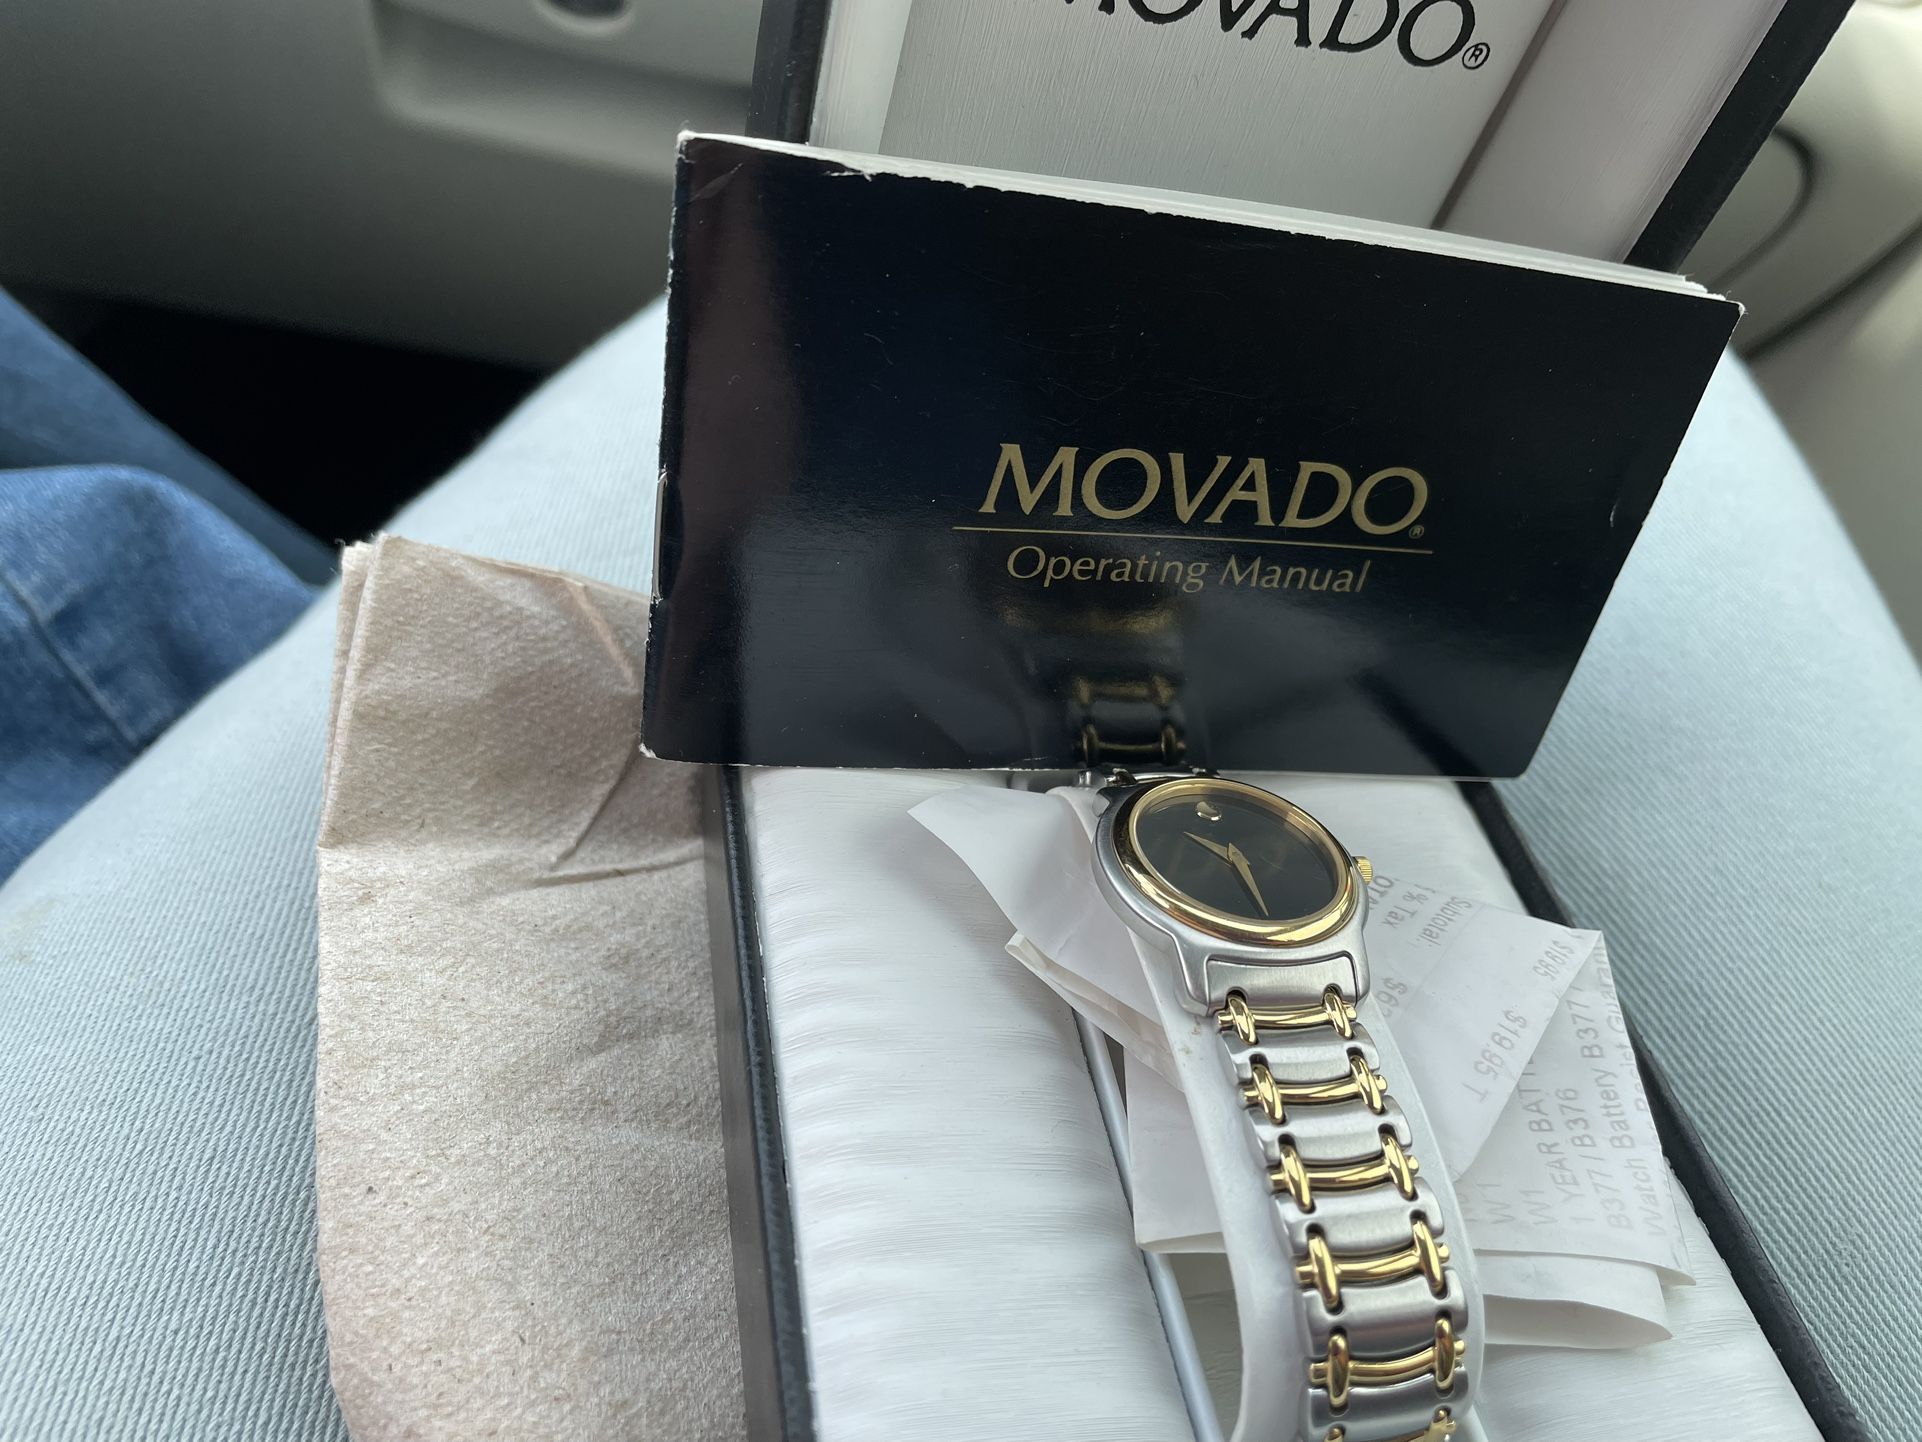 New Ladies Movado Museum Standard watch